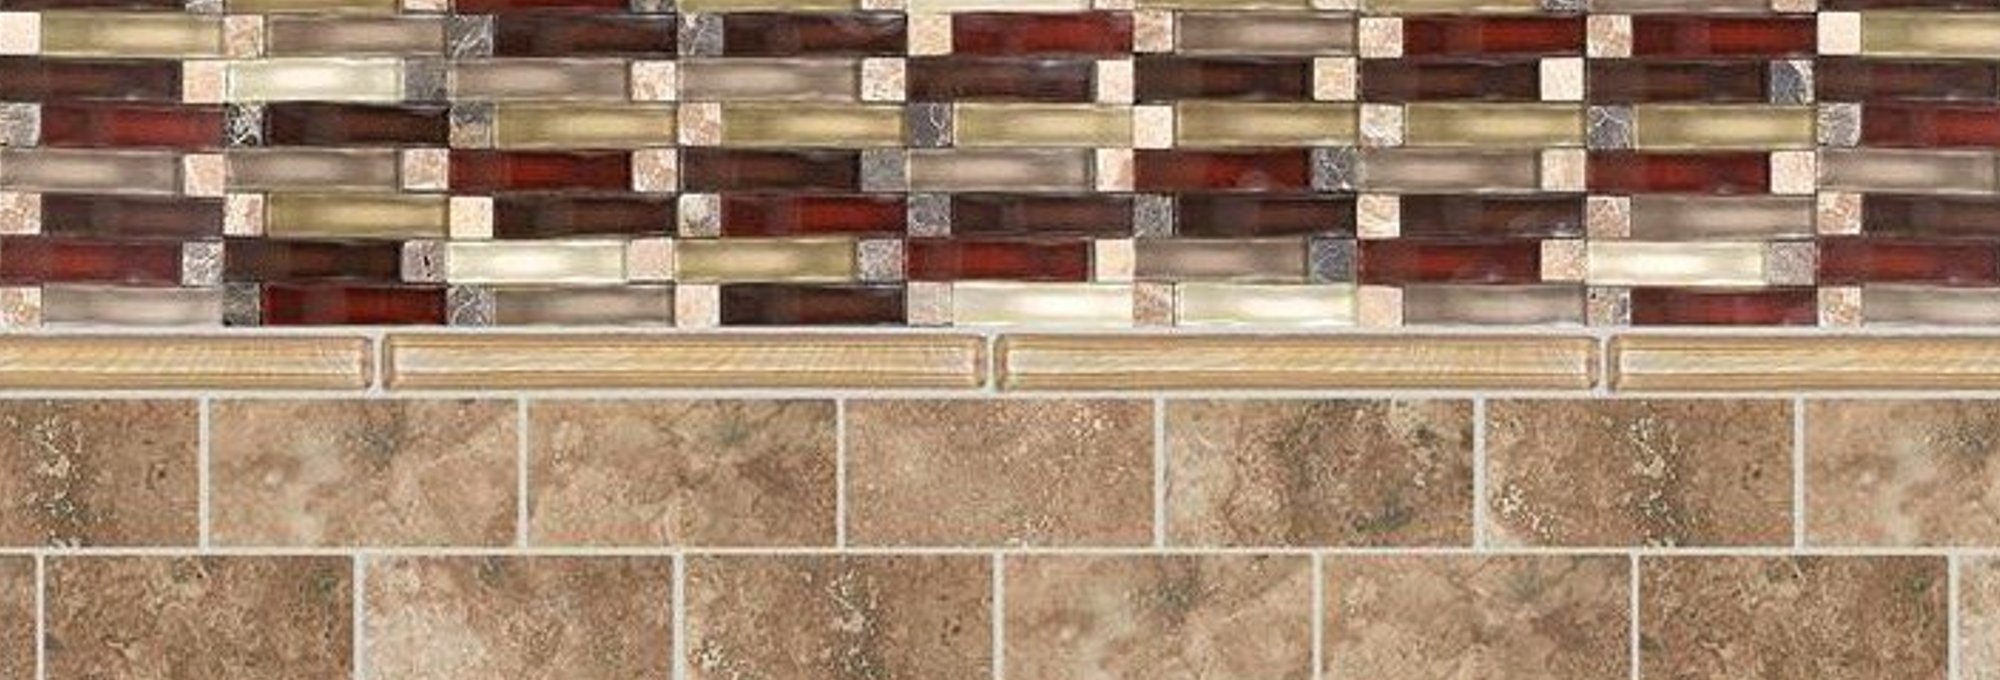 tile & stone backsplash from McLaurin Carpets Inc. in Soso, MS